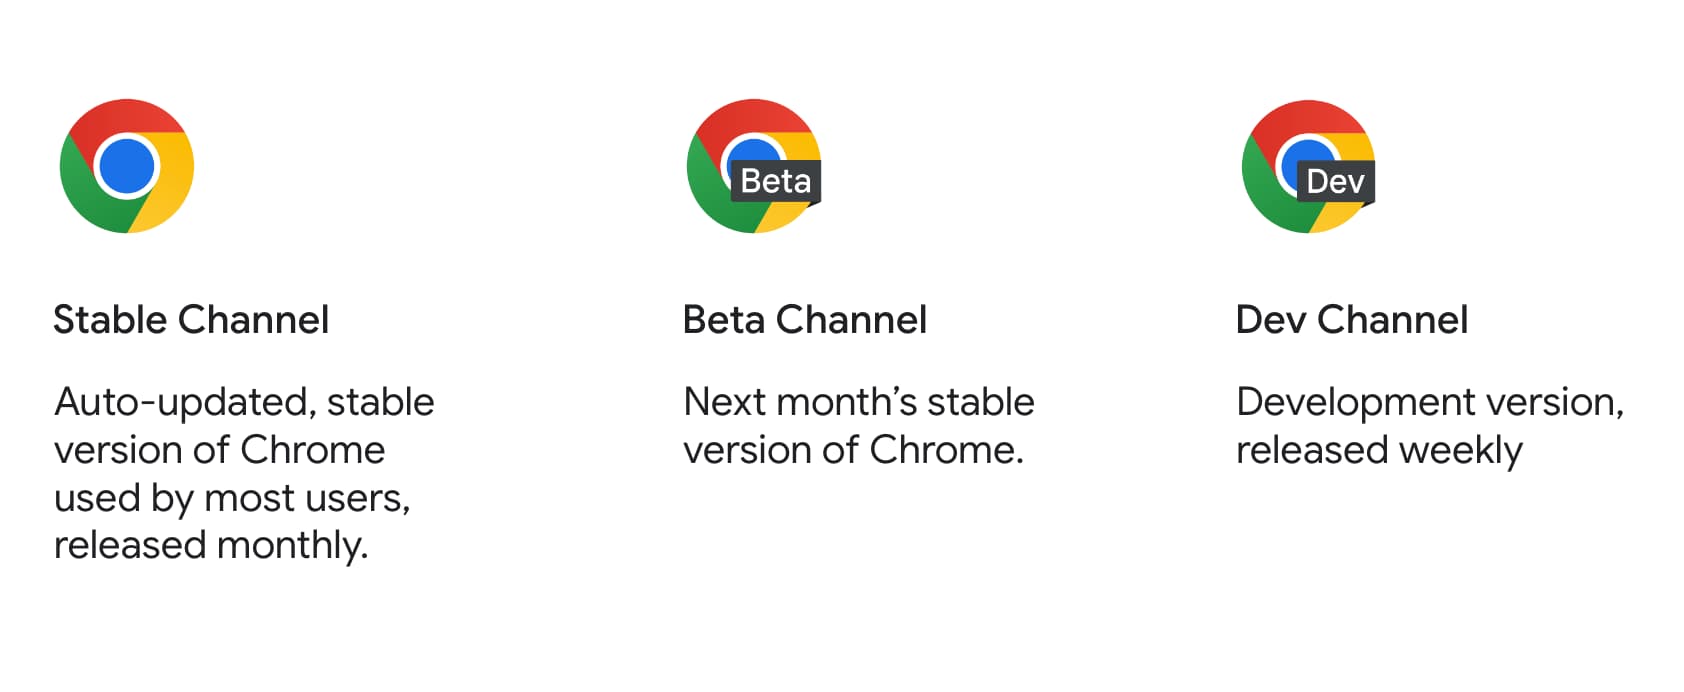 Chrome 穩定版、Beta 版和開發人員版的產品圖示及其說明。